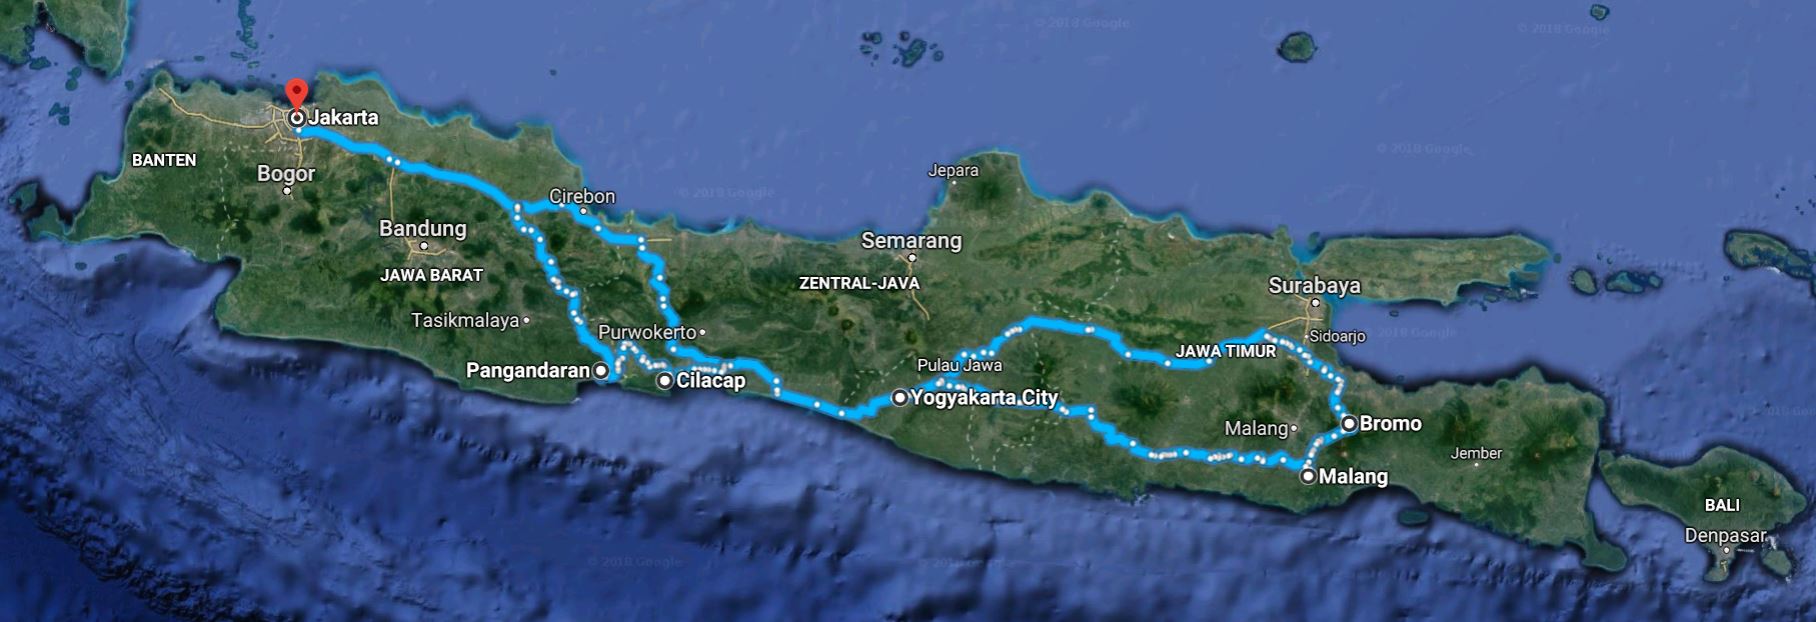 Travel route java Indonesia